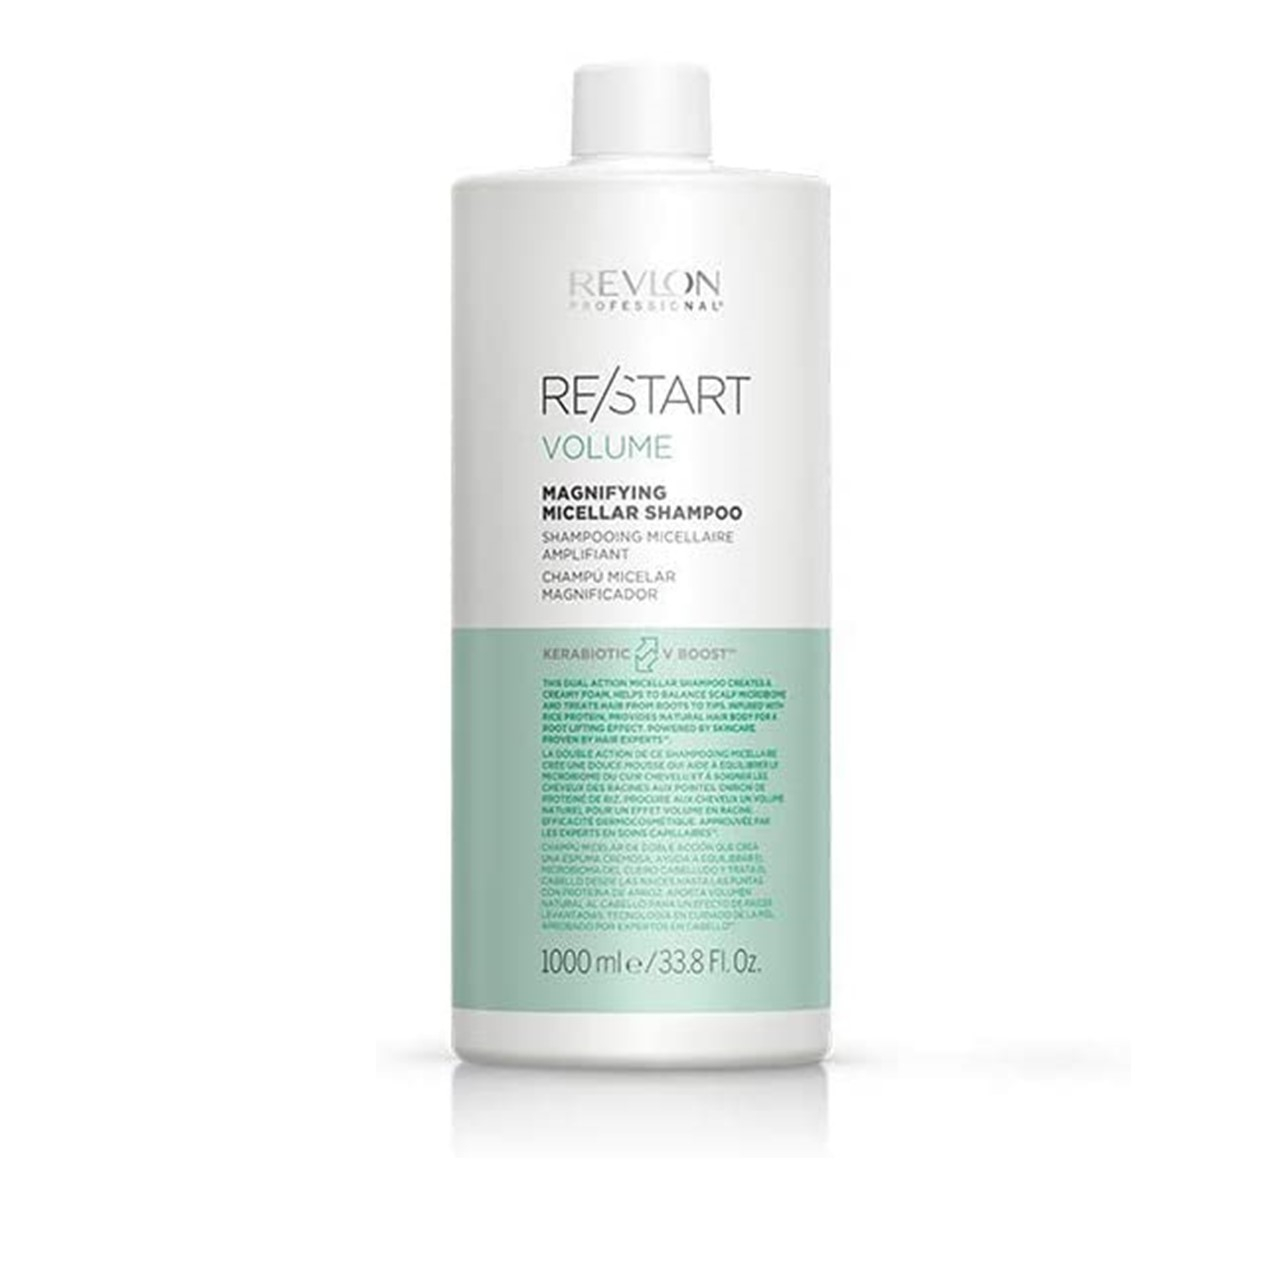 Buy Revlon Professional Re/Start Volume Magnifying Micellar Shampoo 1L  (33.81fl oz) · USA